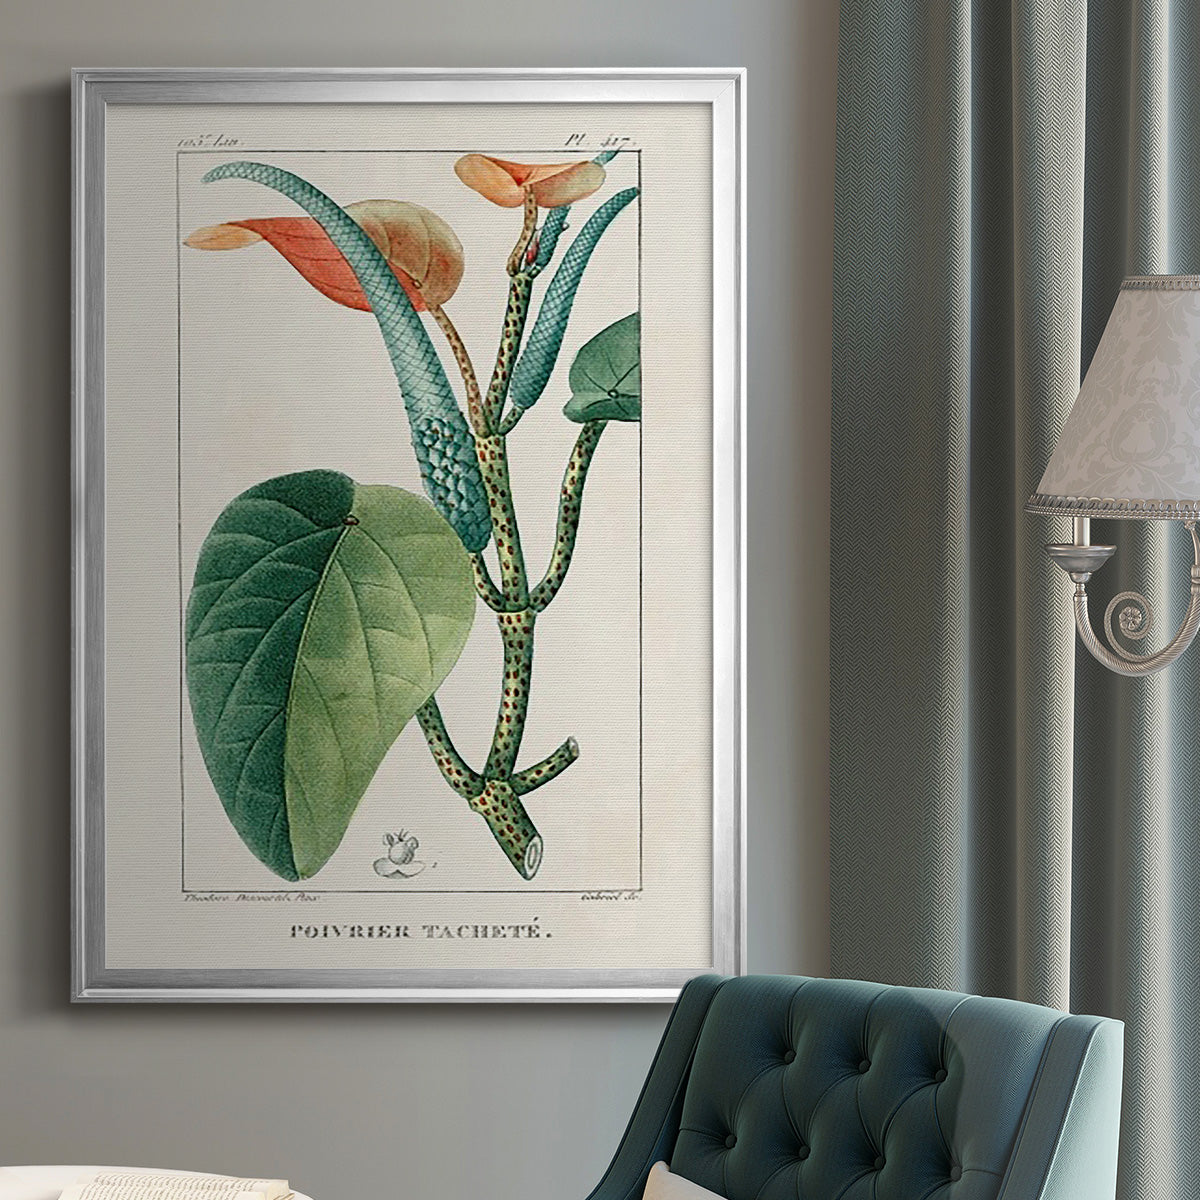 Turpin Tropical Botanicals II Premium Framed Print - Ready to Hang